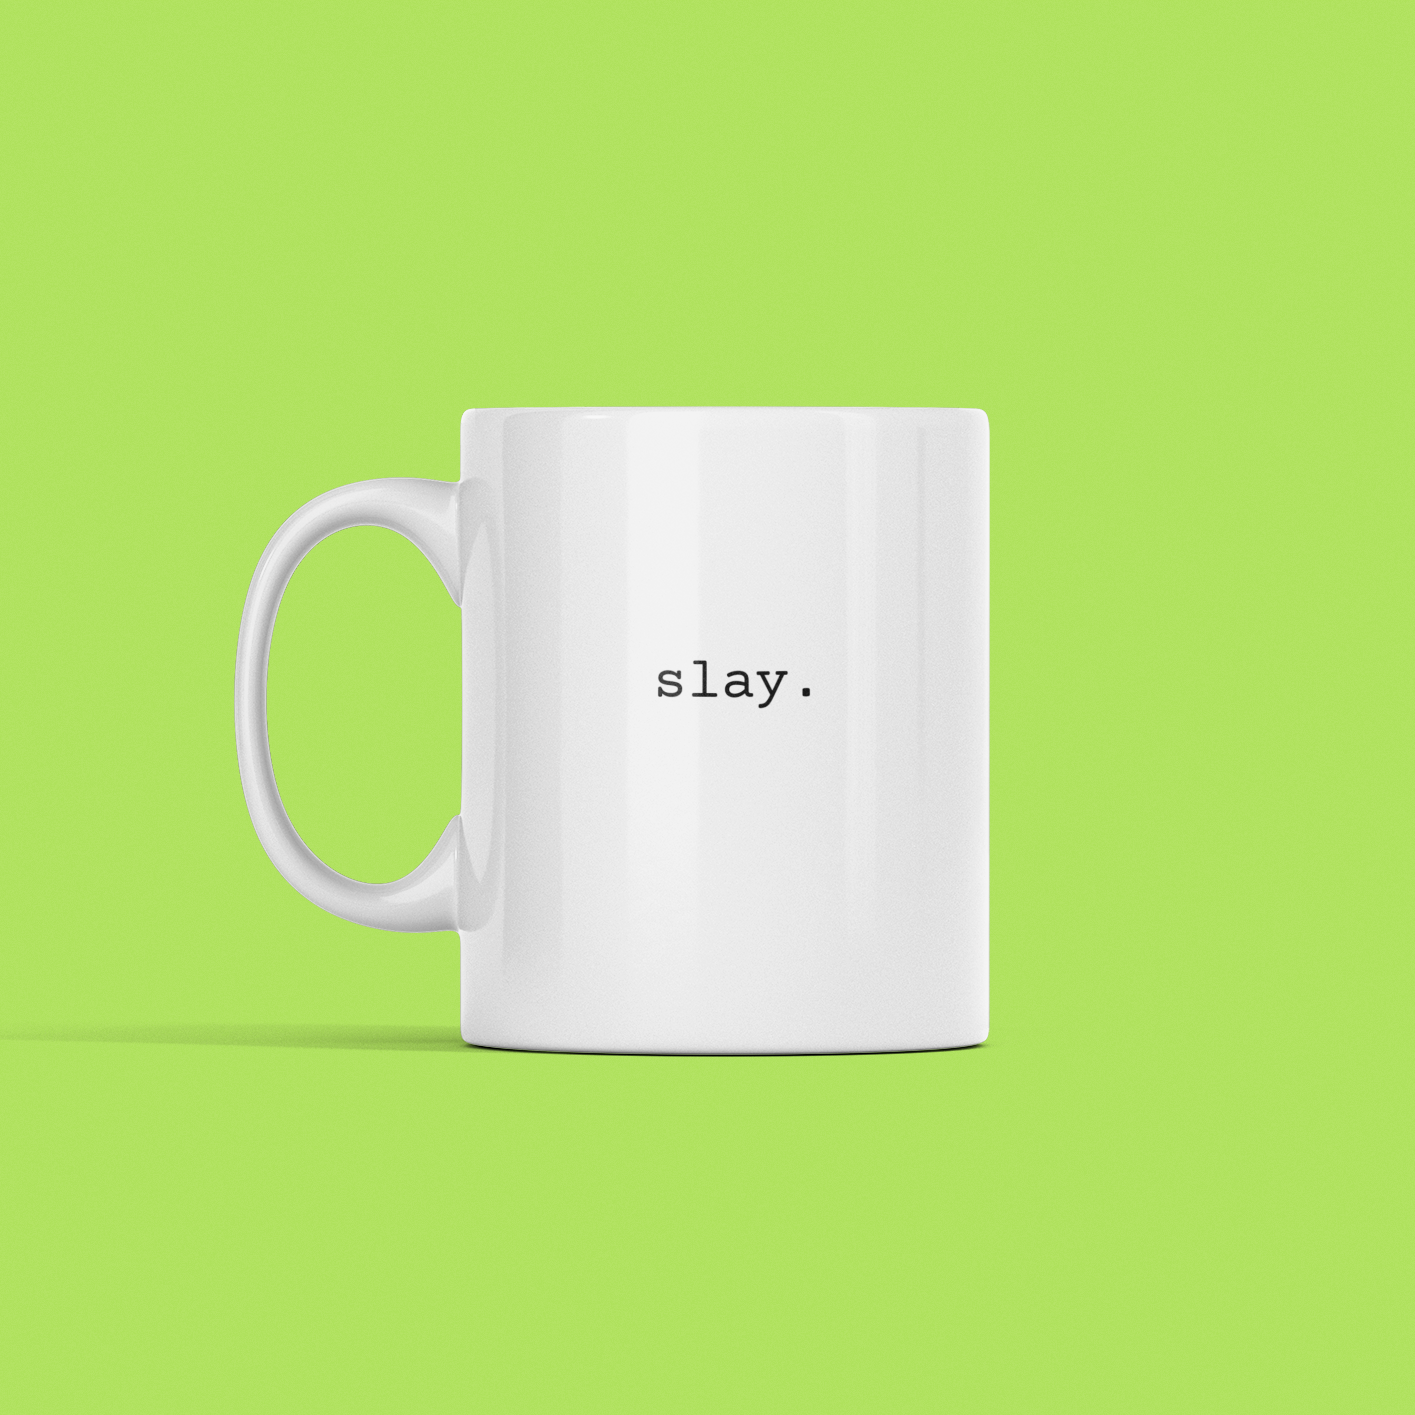 Slay Mug